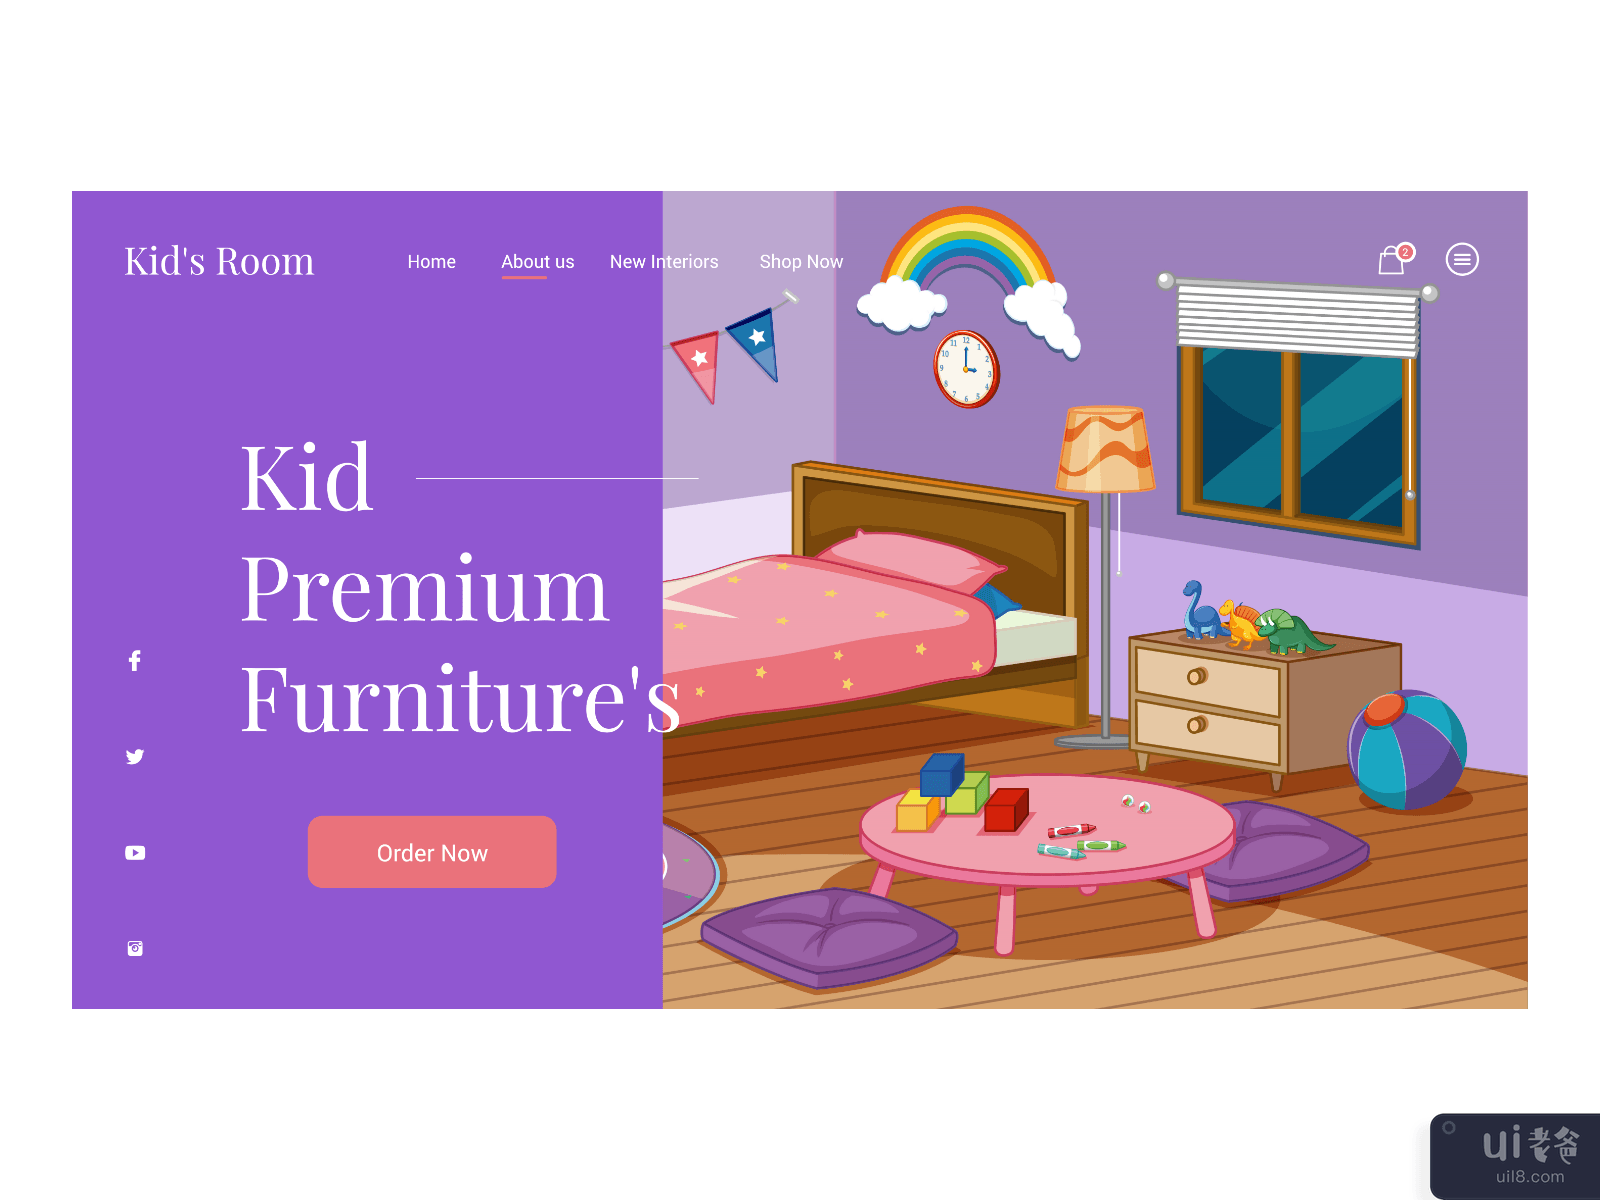 Kid Premium Furniture 的登陆页面 - 家具的网页模板(Kid Premium Furniture's Landing Page - Furniture's Web Template)插图